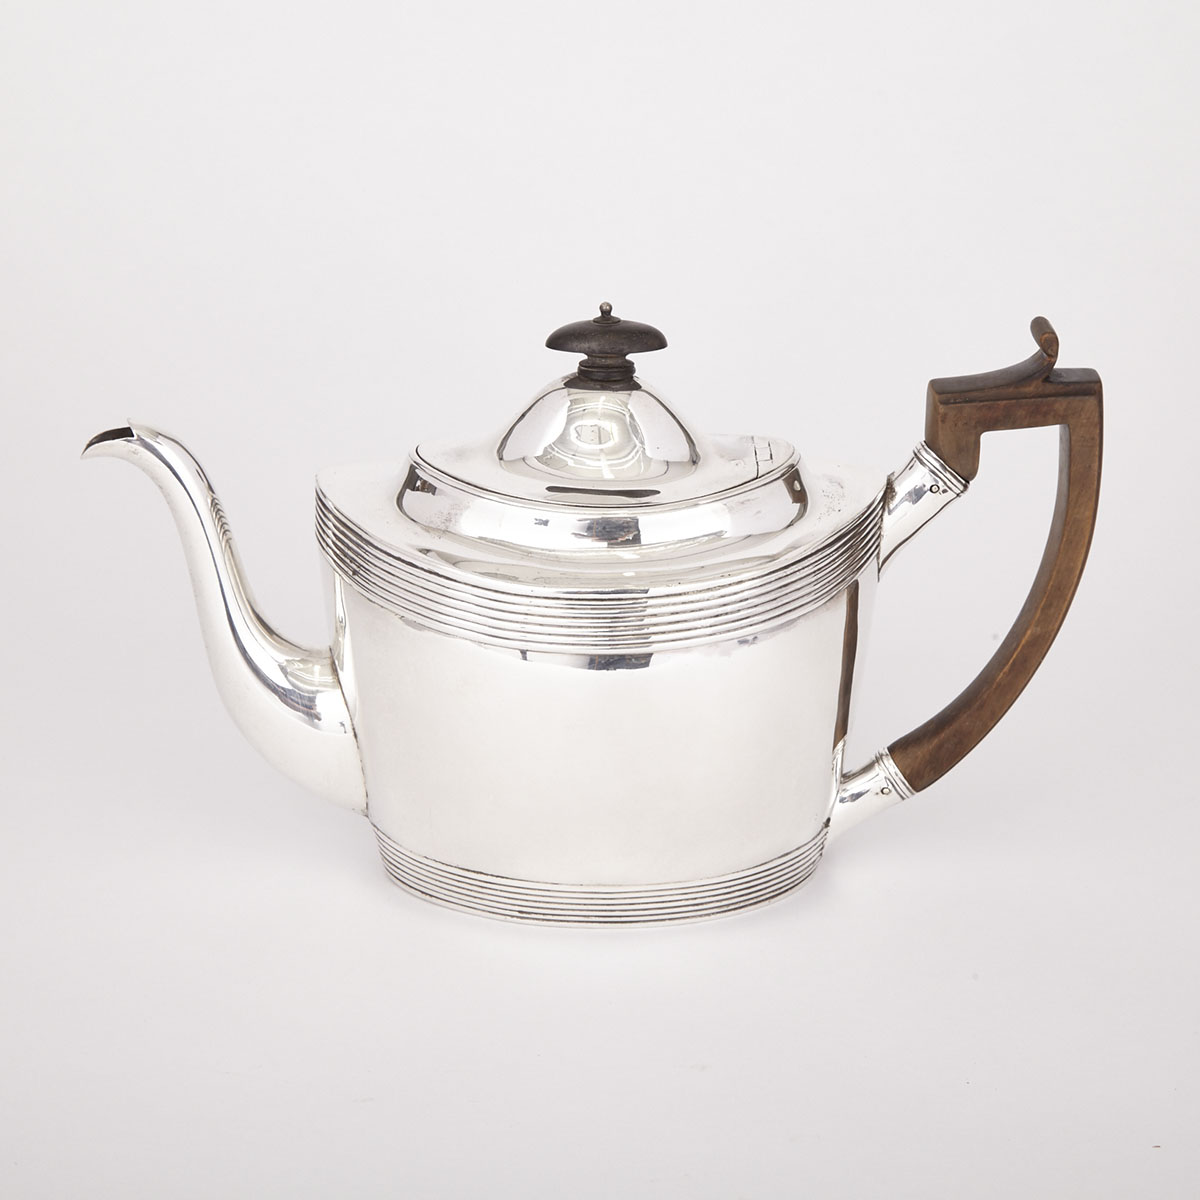 George III Silver Oval Teapot, Peter, William & Ann Bateman, London, 1800